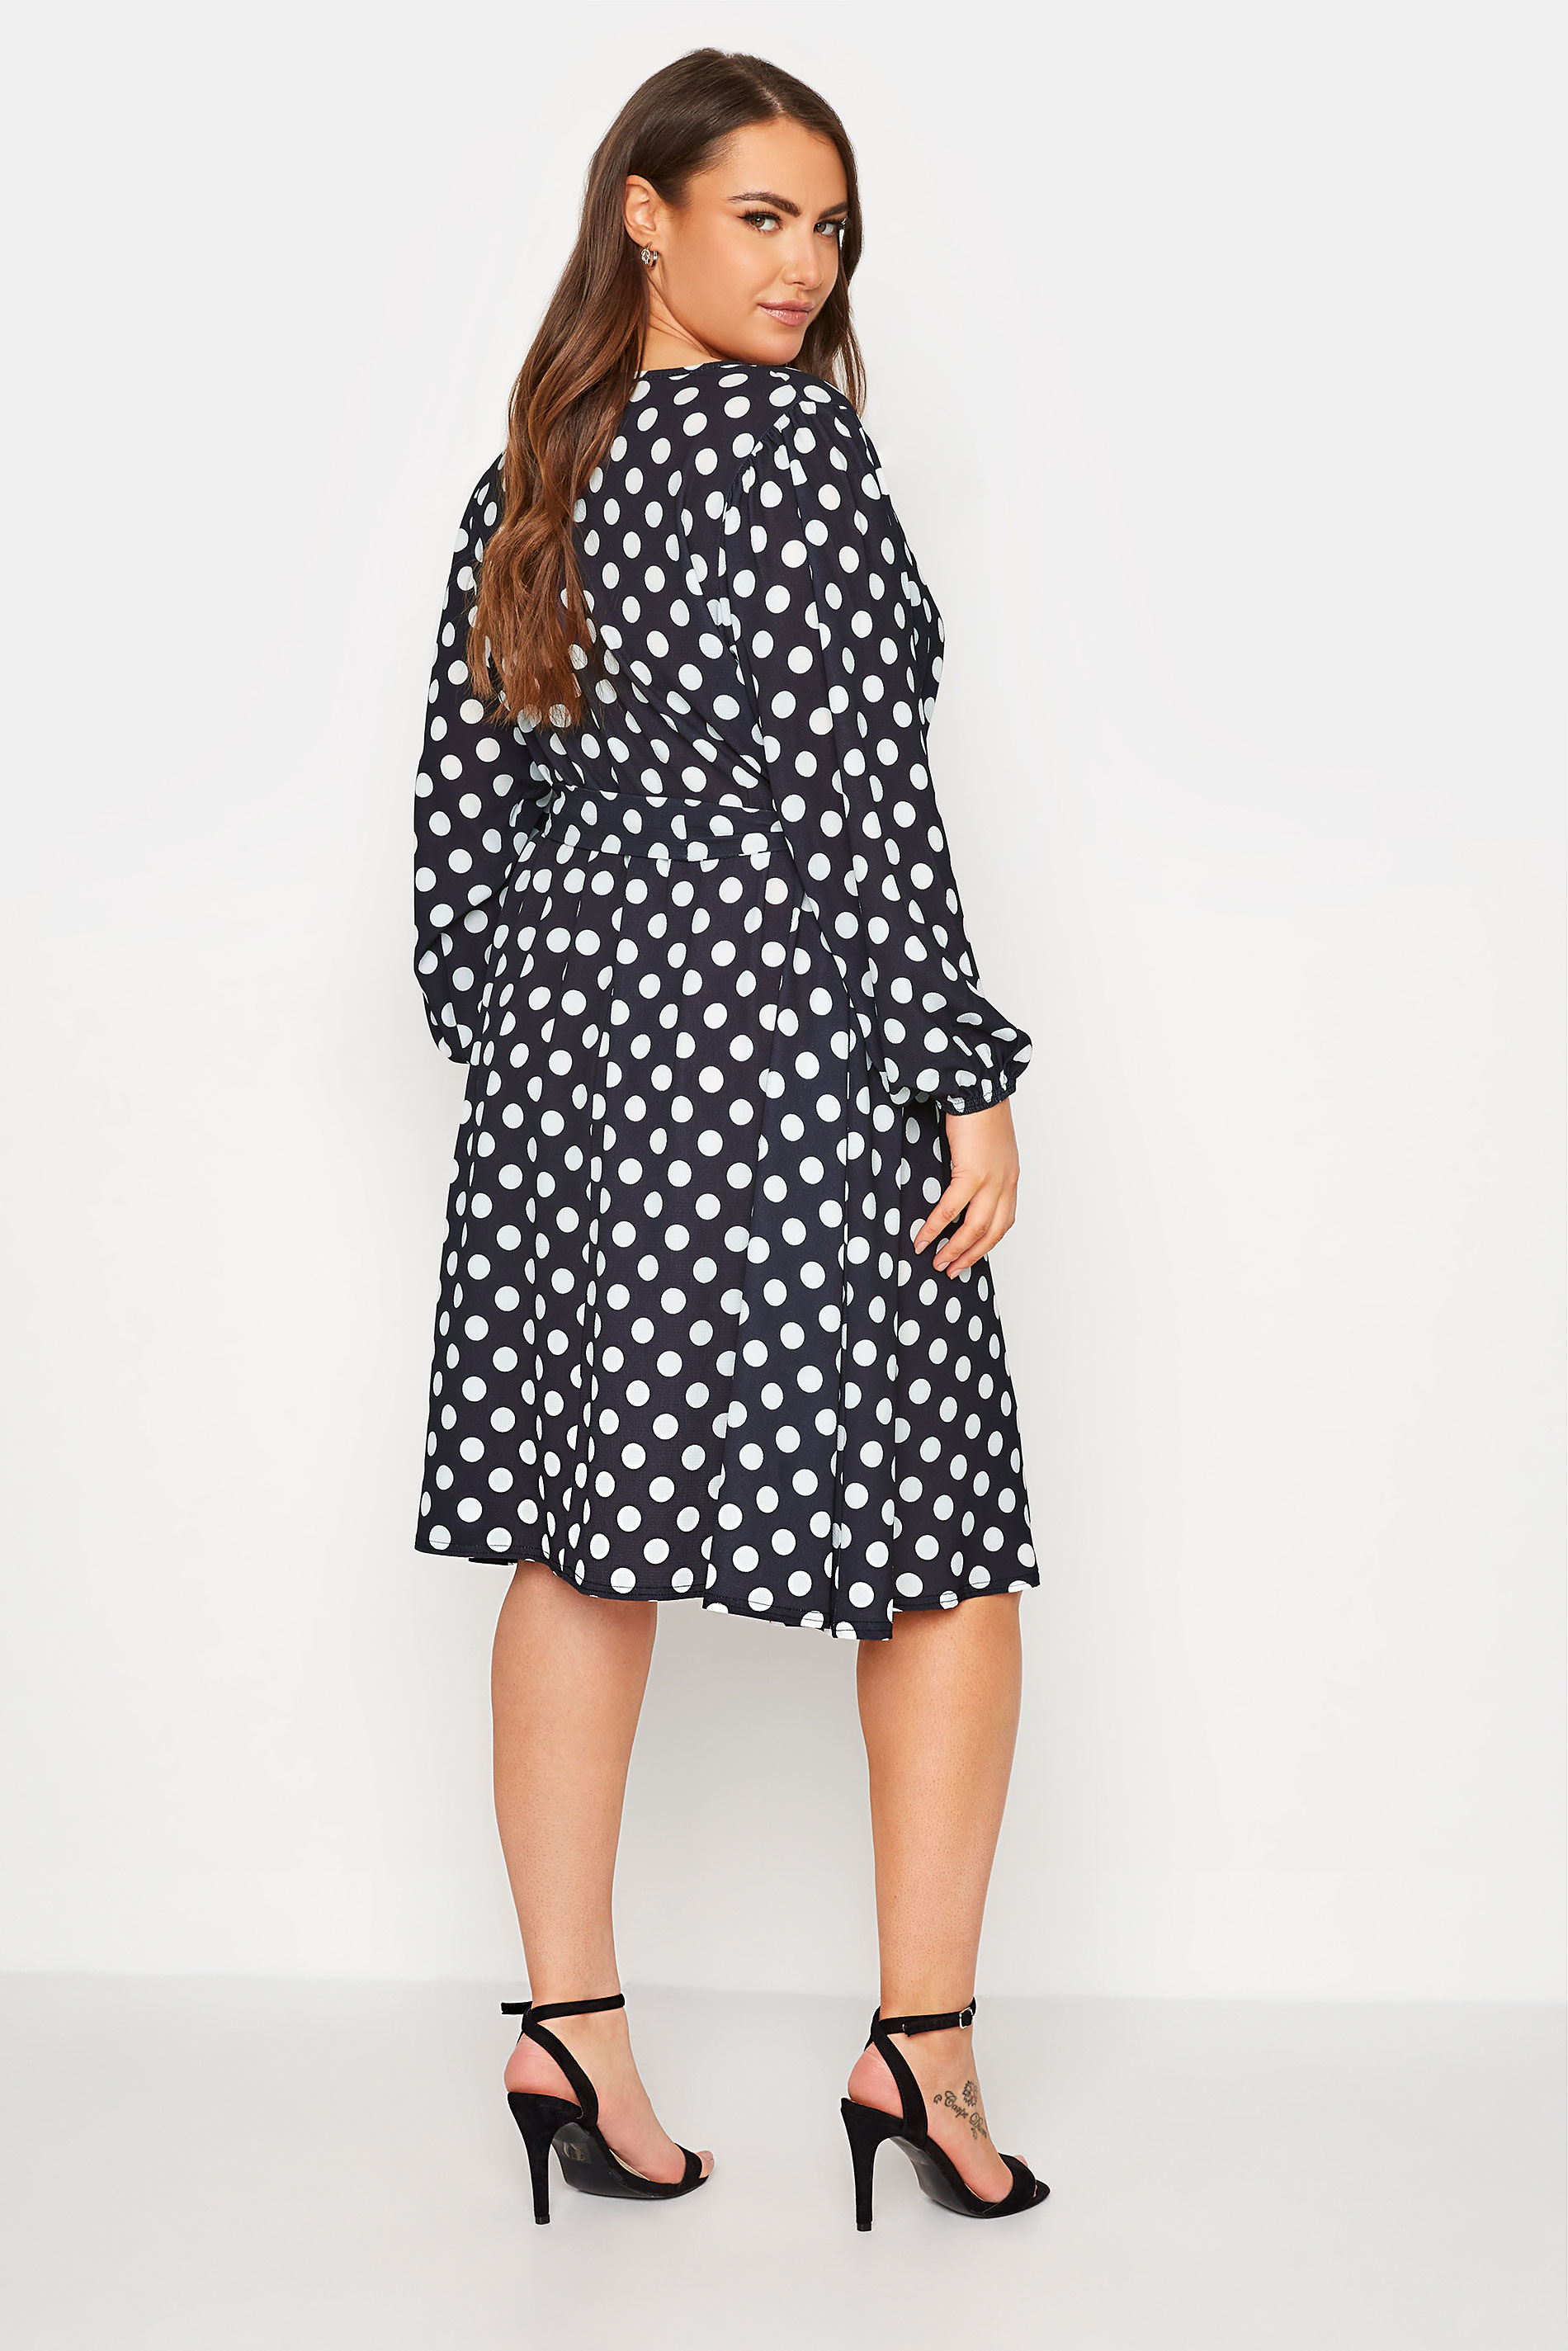 YOURS LONDON Plus Size Black & White Polka Dot Wrap Dress | Yours Clothing 3